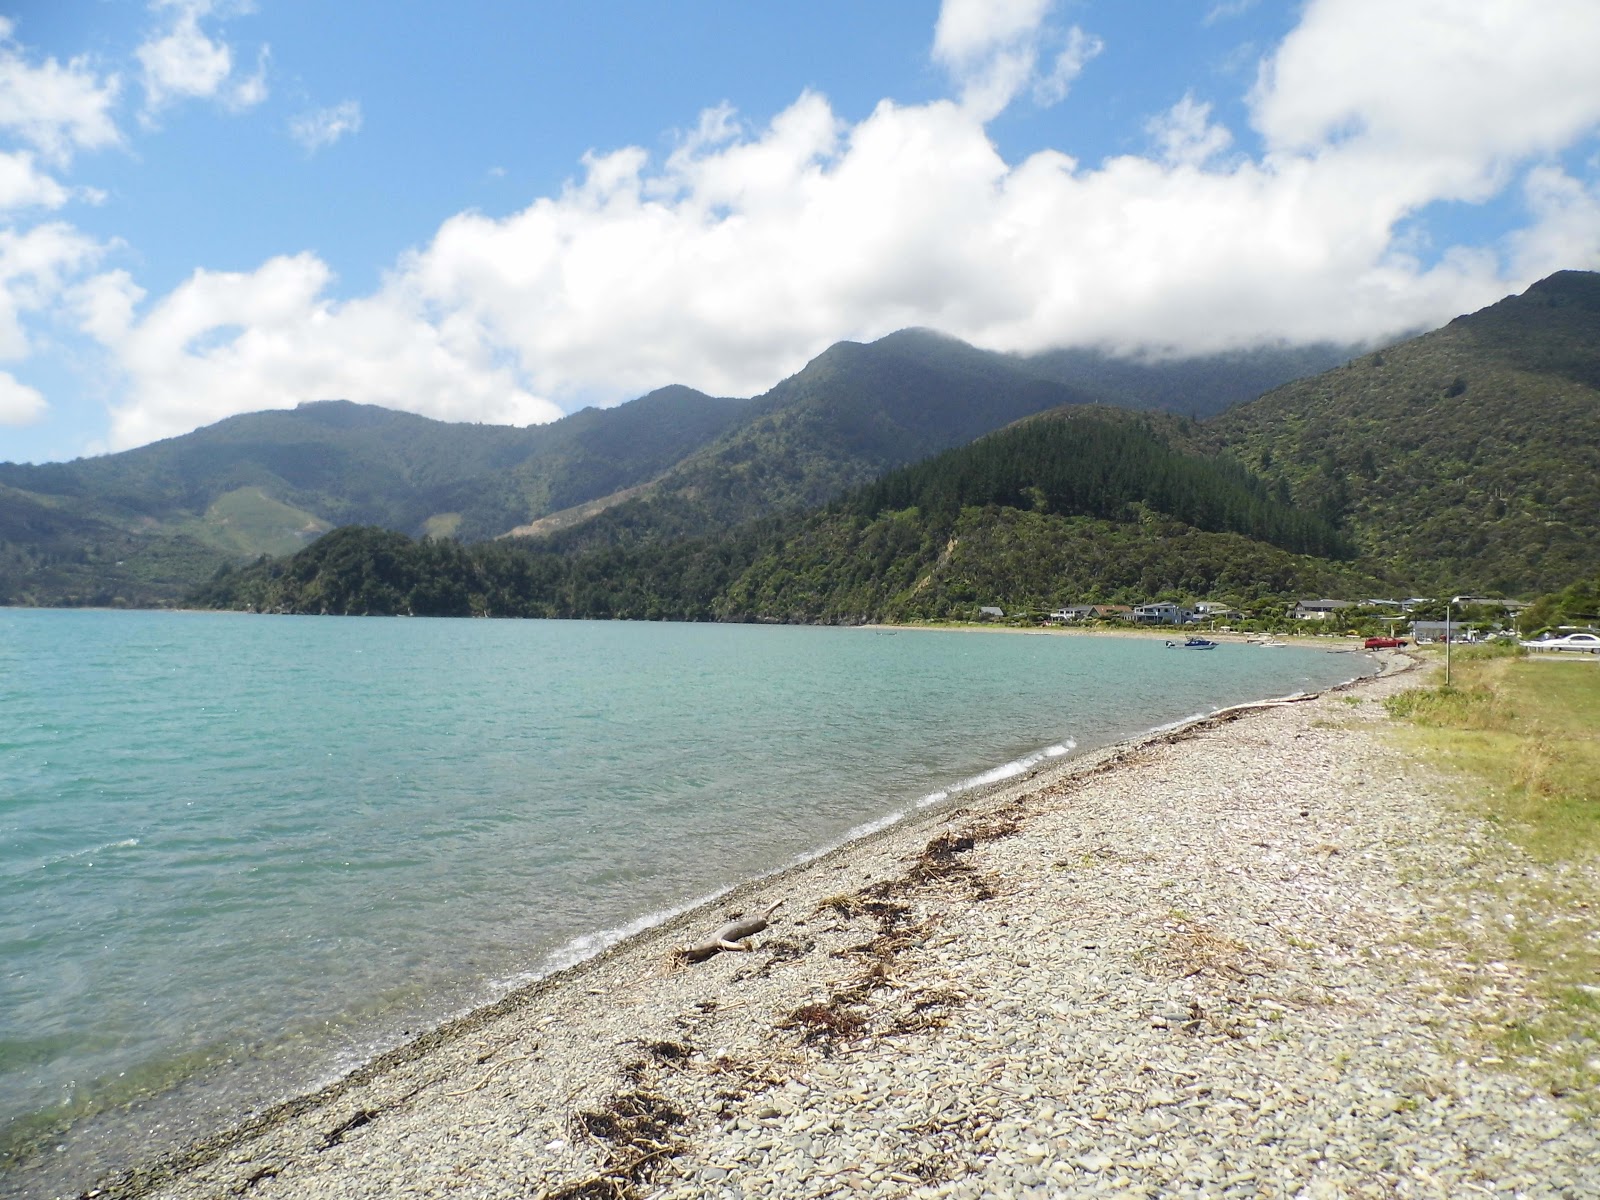 Foto de Okiwi Bay Beach - lugar popular entre os apreciadores de relaxamento